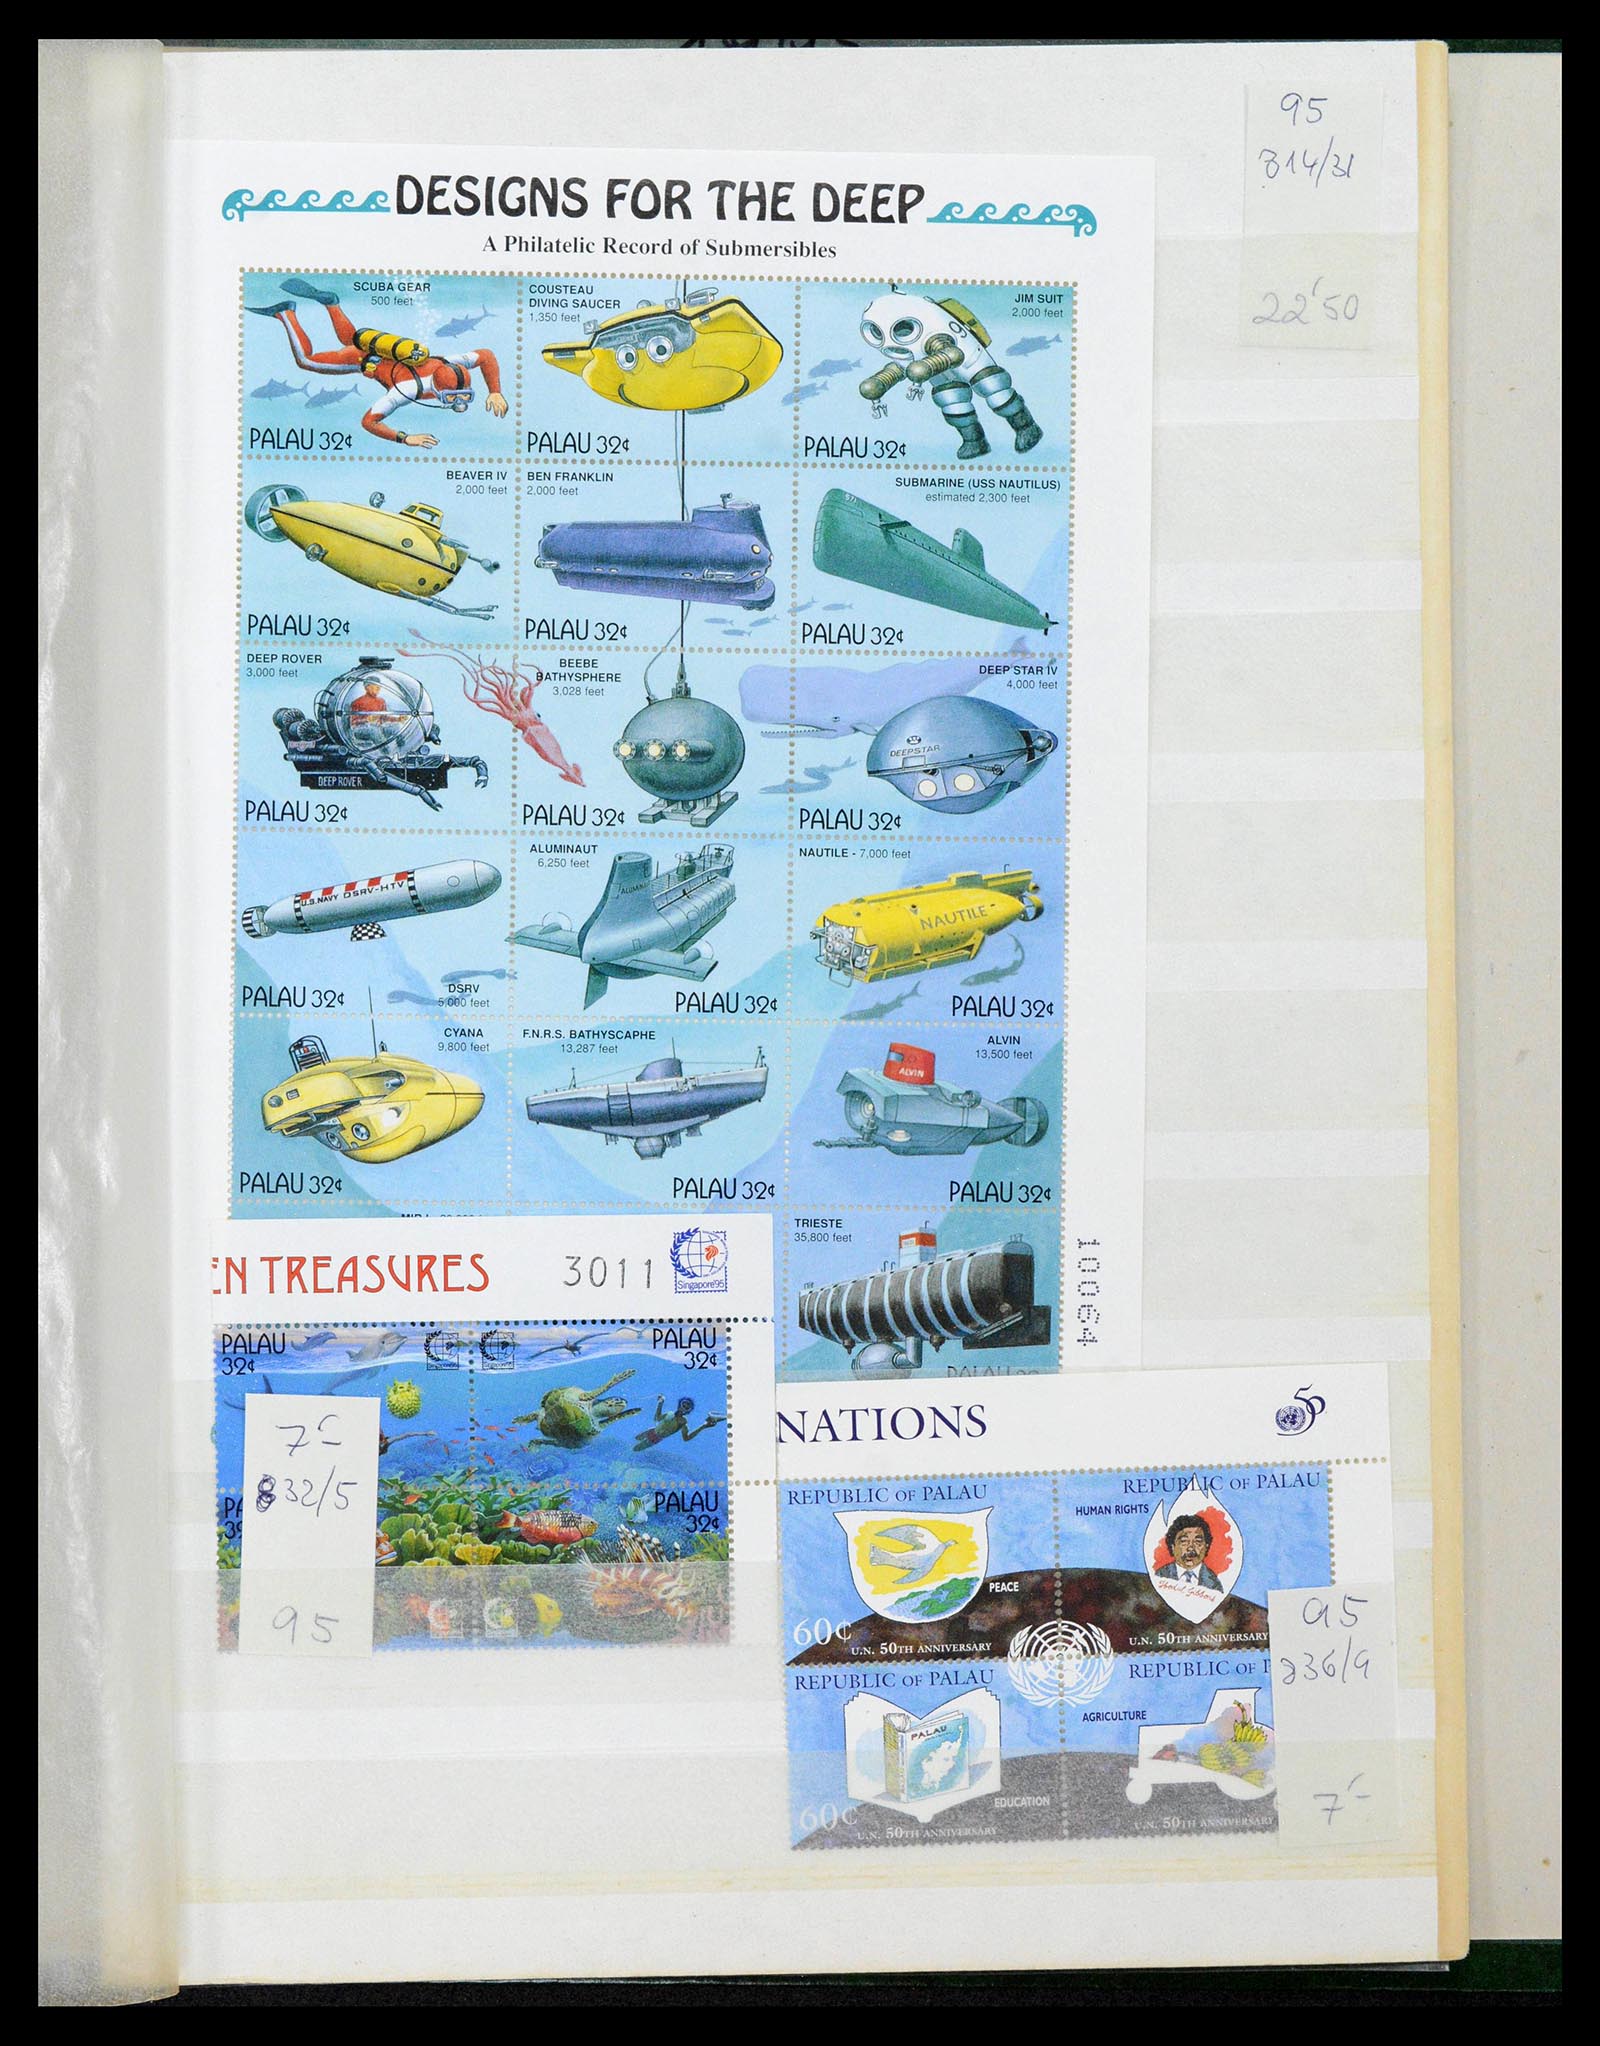 39222 0061 - Stamp collection 39222 Palau, Micronesia and Marshall islands 1980-1995.